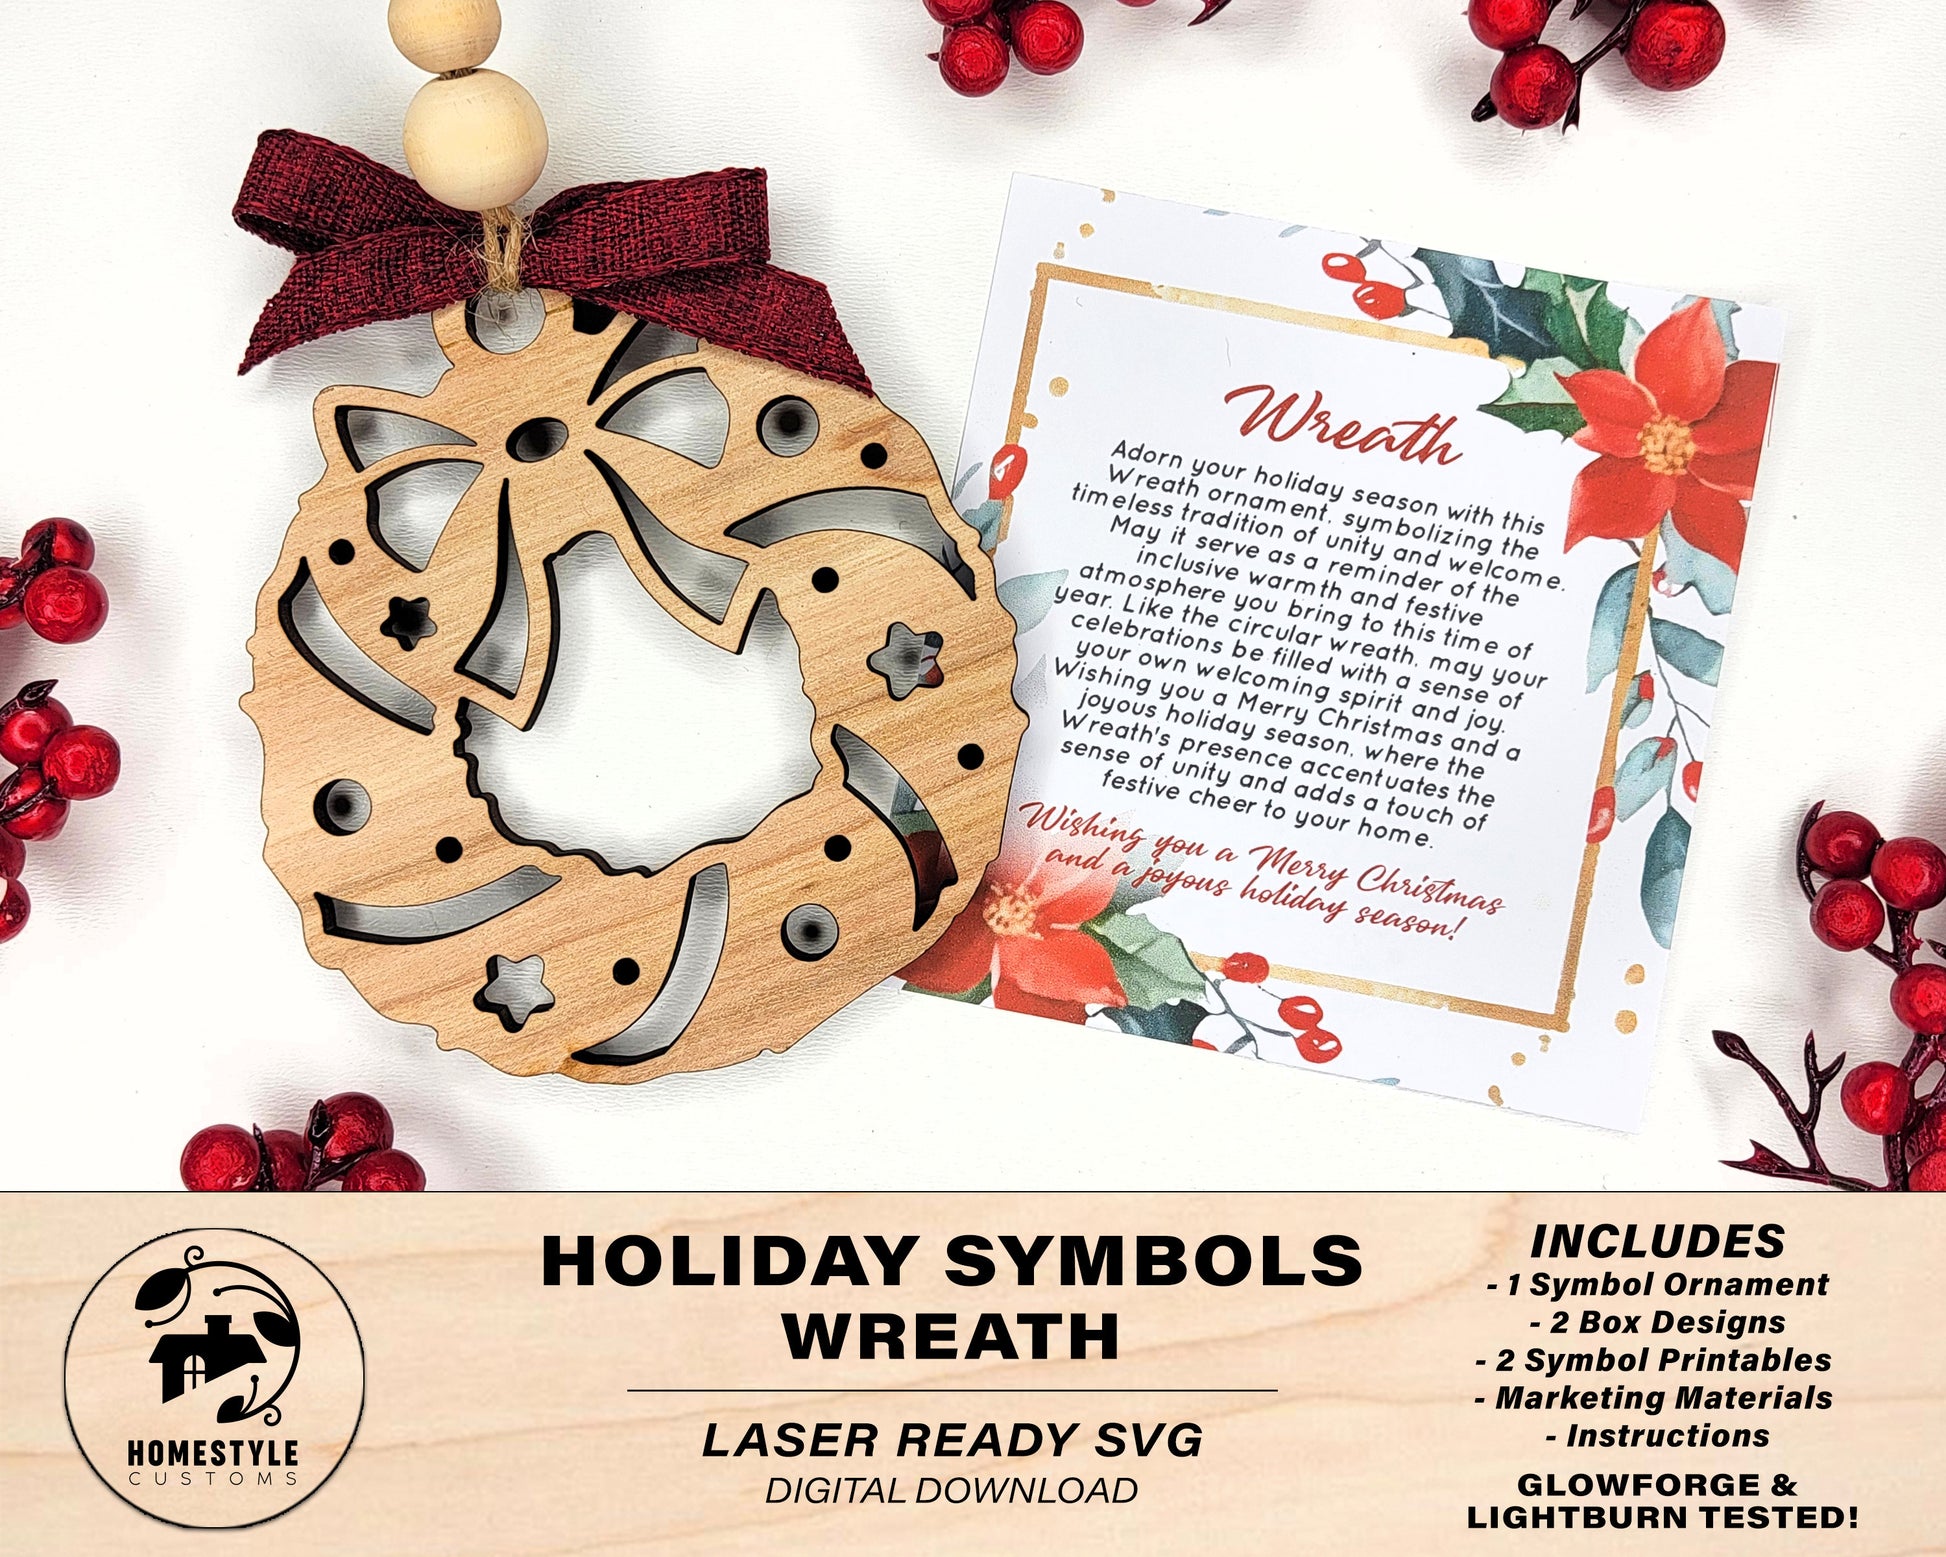 Wreath Holiday Symbol - 1 Symbol Ornament - 2 Prints - 2 Box Designs - SVG, PDF, AI File Download - Glowforge and Lightburn